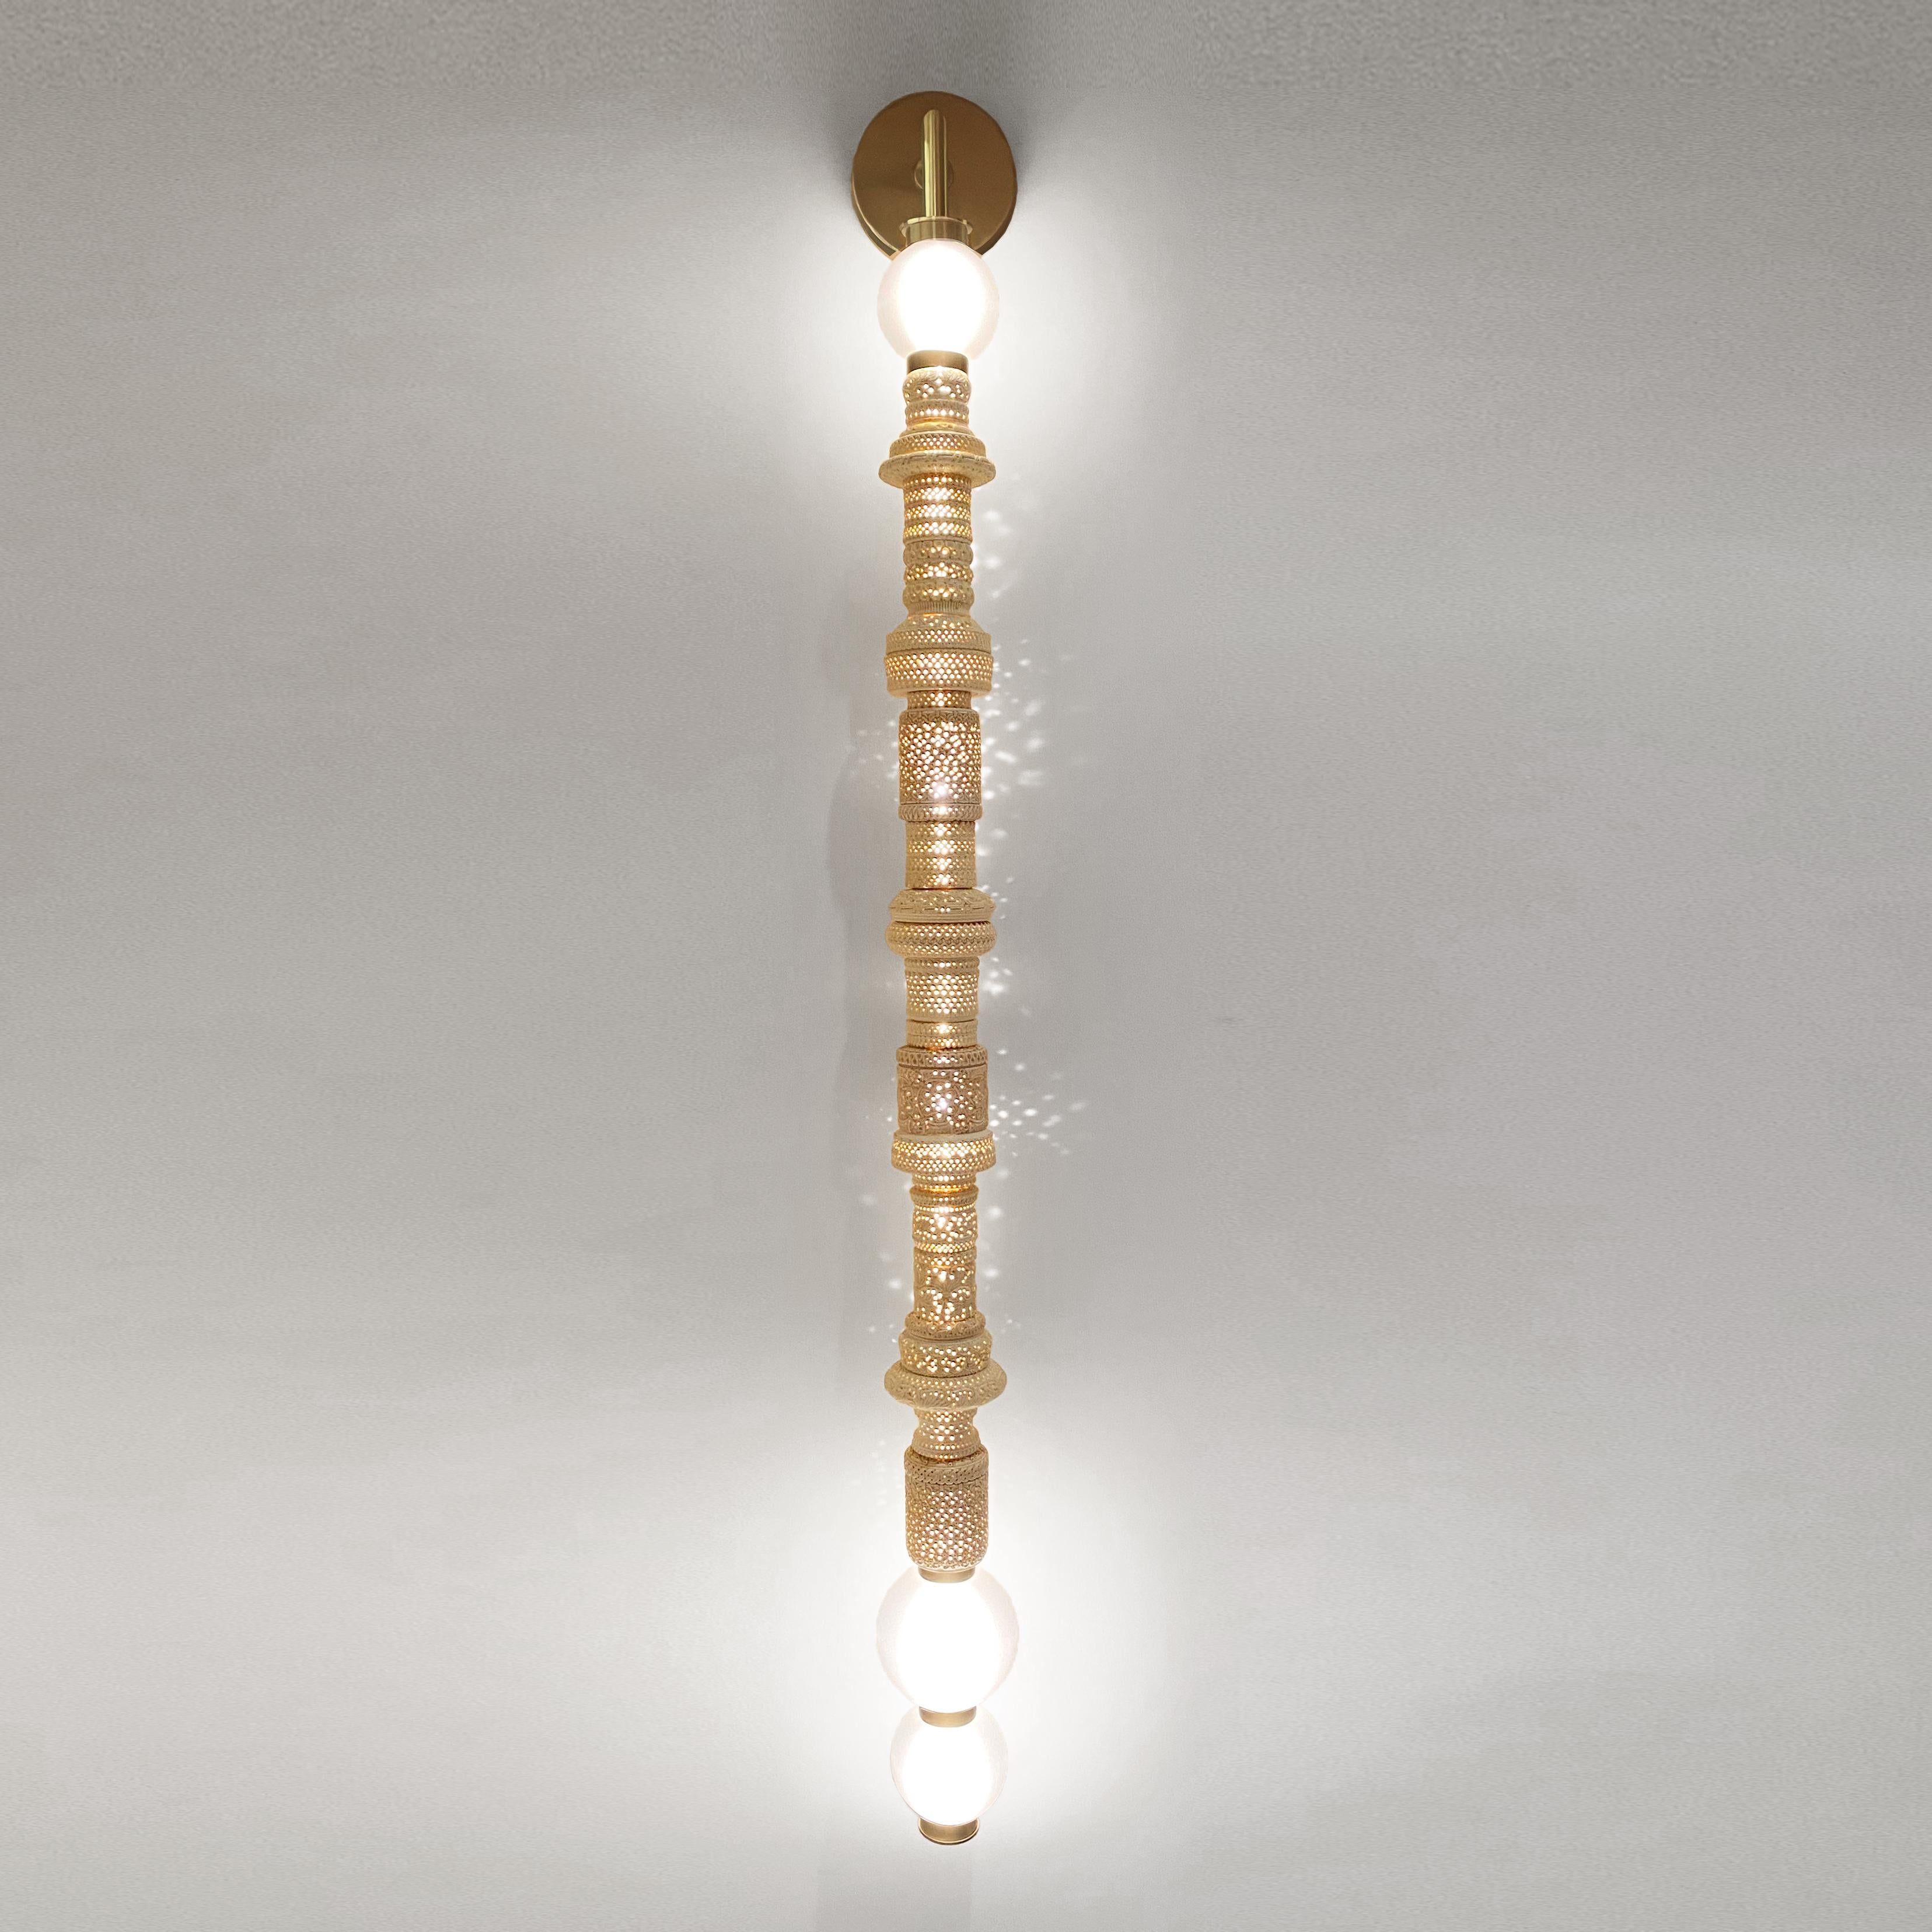 Feyza Kemahlioglu
Applique Pillars of Meerschaum, 2022
Meerschaum, verre soufflé, laiton, LED
Mesures : 60 x 6 x 6 pouces.